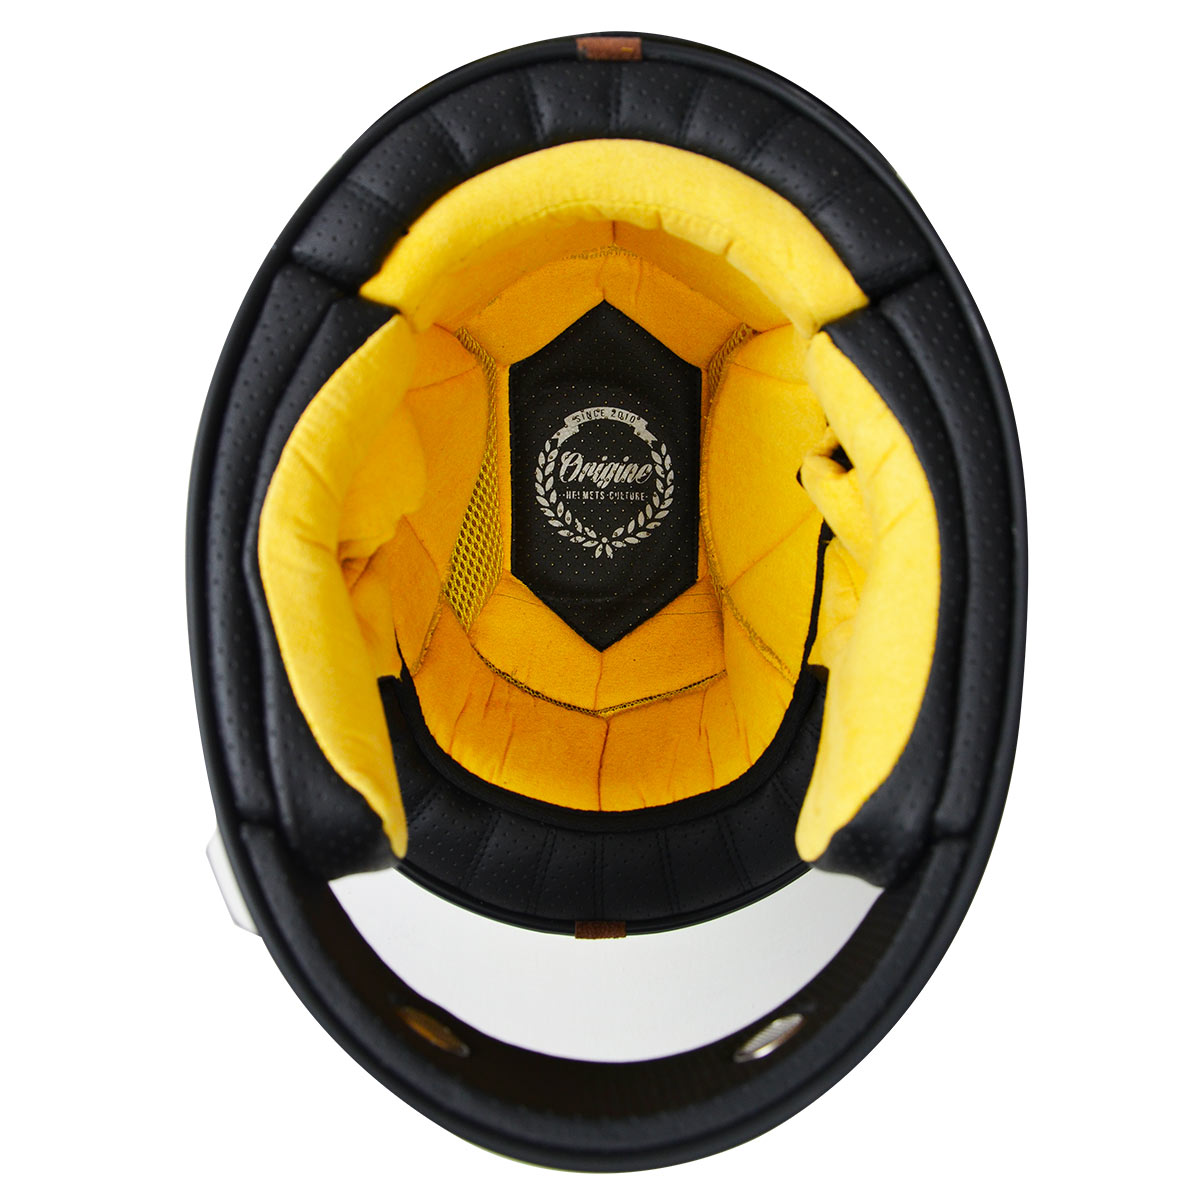 ORIGINE Vega Helmet, Custom Matt Black/Yellow